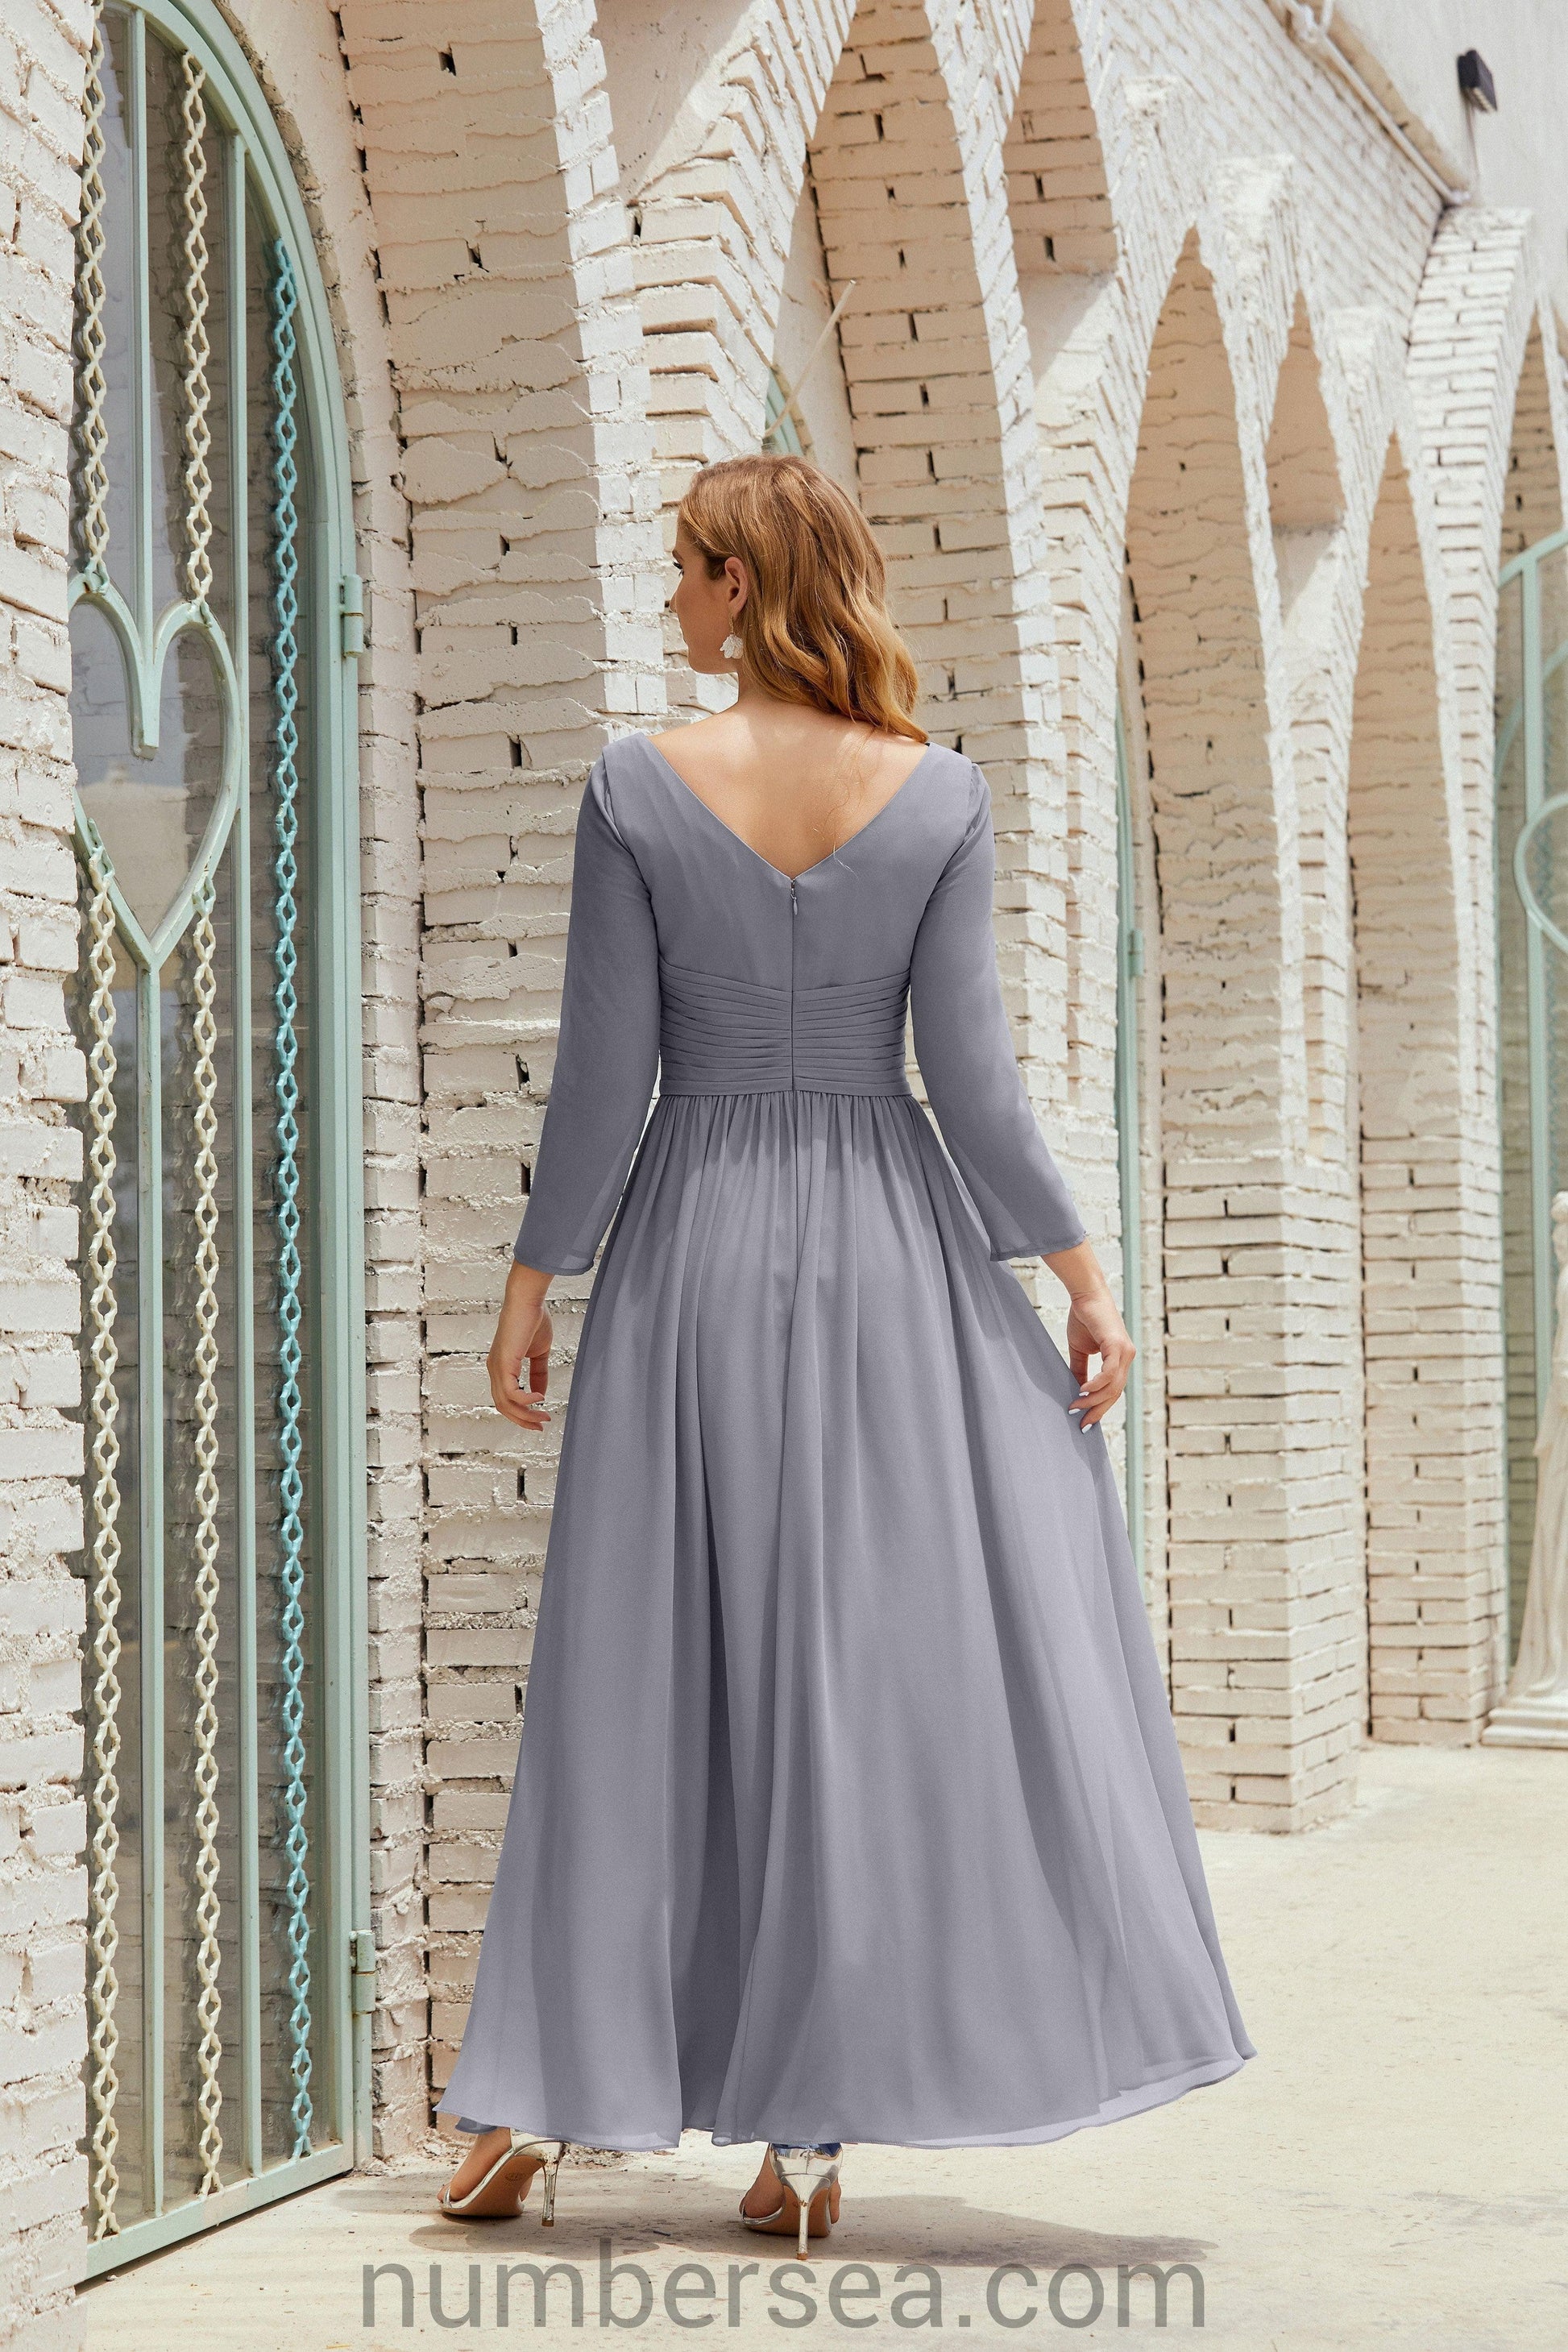 Numbersea Bridesmaid Dress Chiffon Formal Party Dress Evening Dress 28016-numbersea